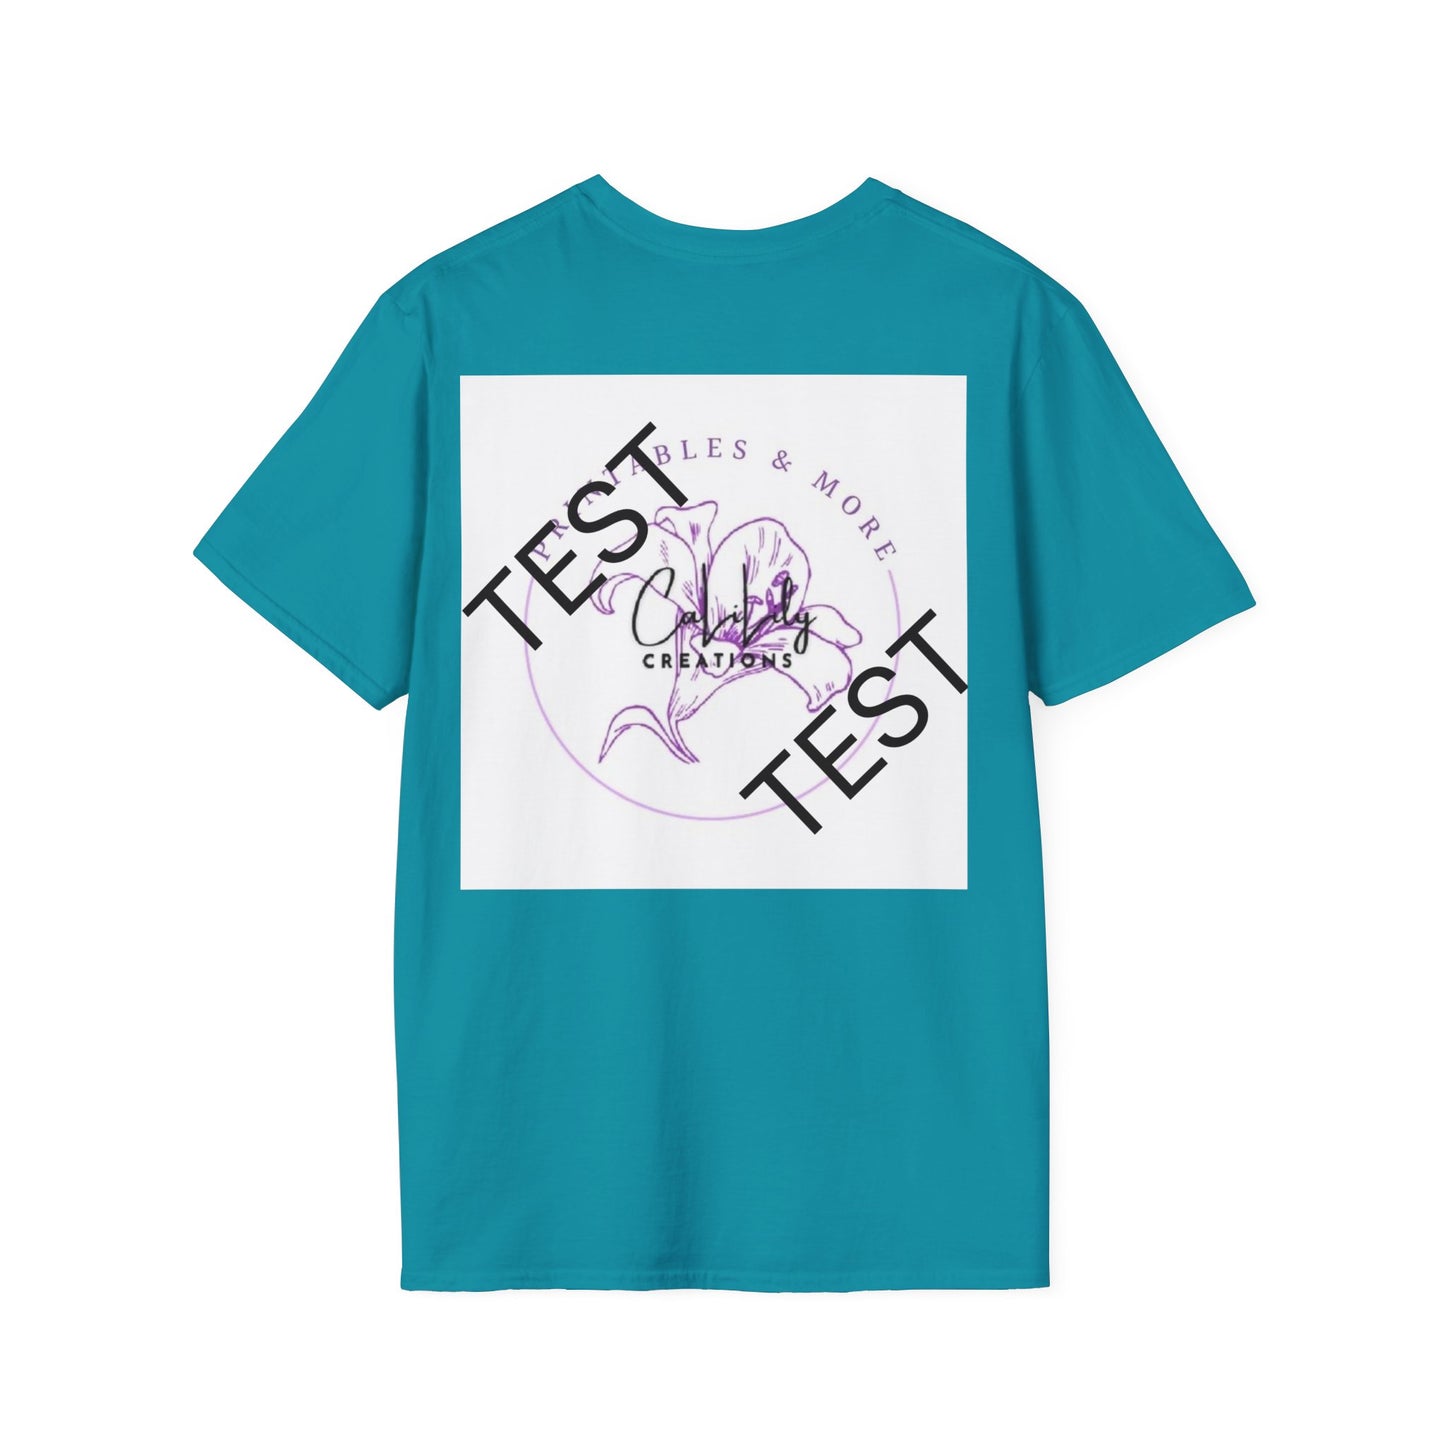 Printed Both sides - Unisex Softstyle T-Shirt